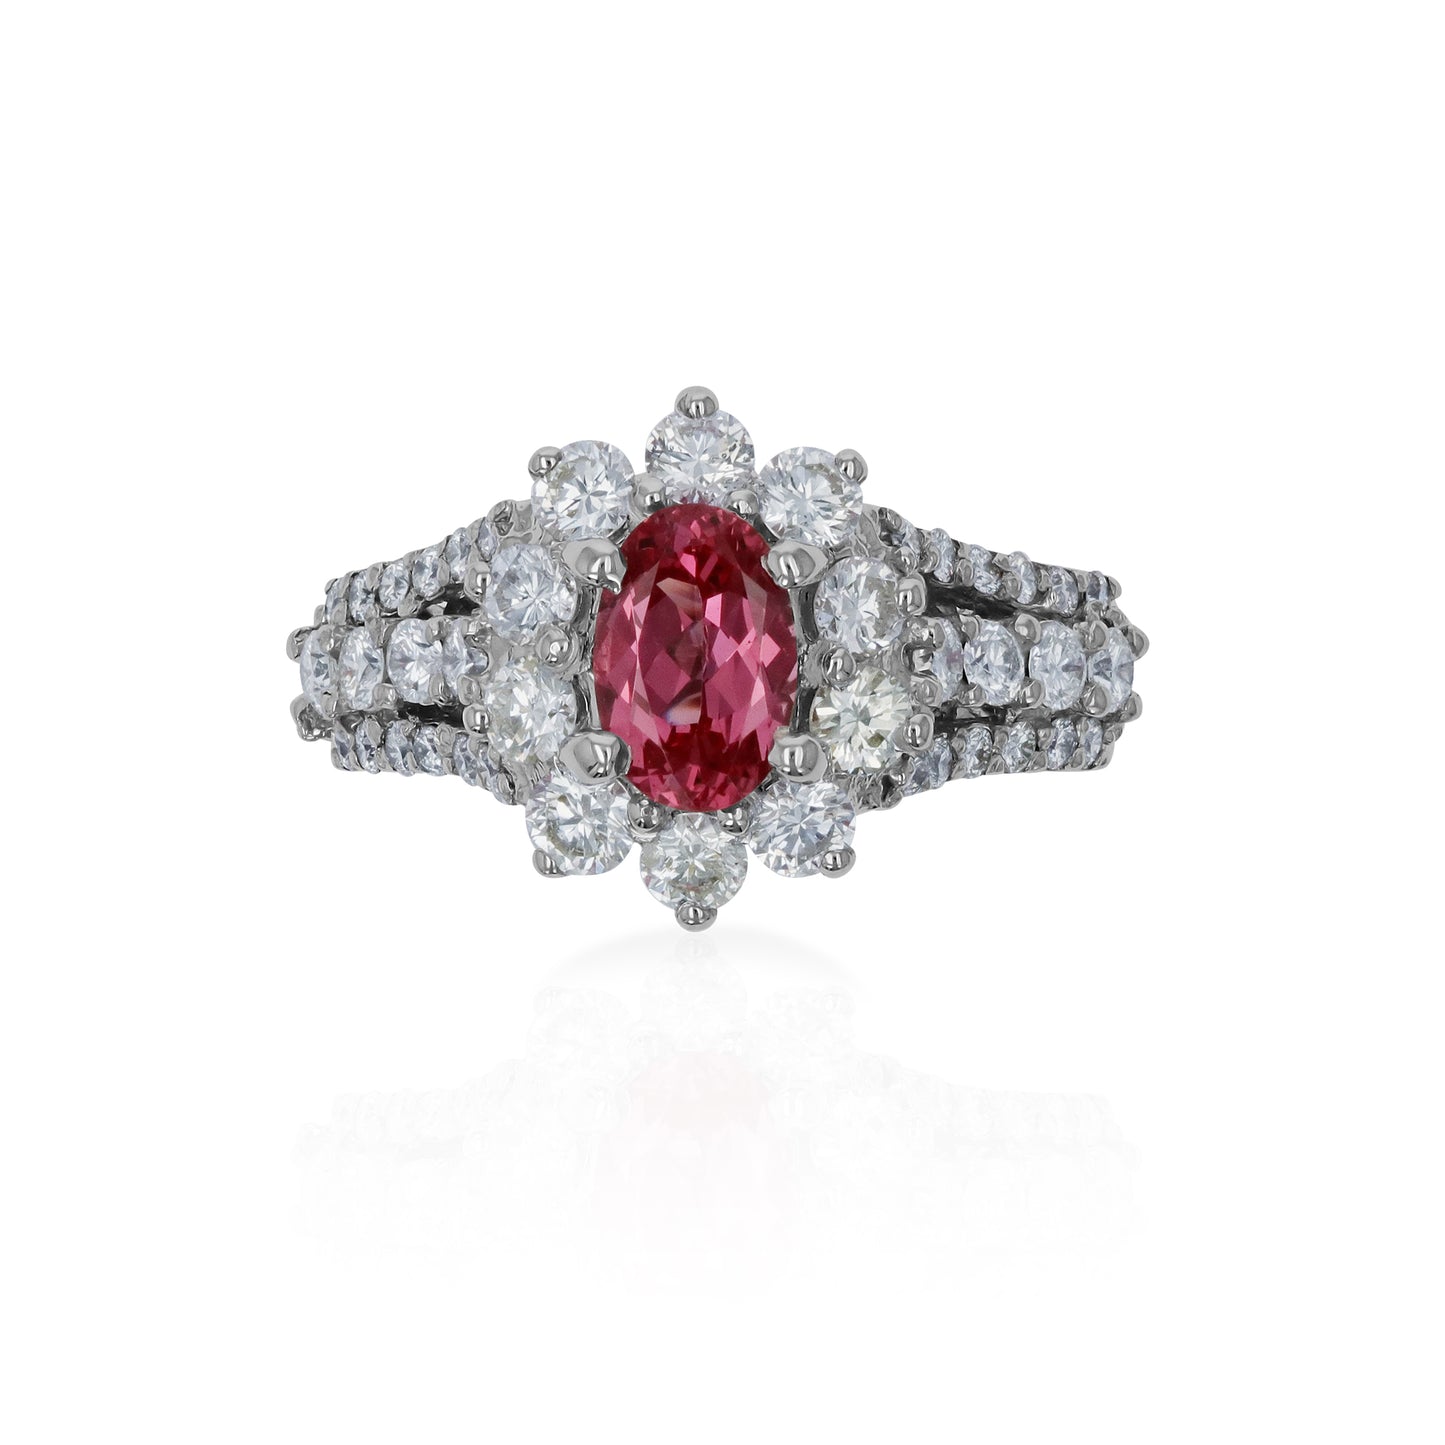 Pink sapphire engagement ring with diamonds / Undina | Eden Garden Jewelry™